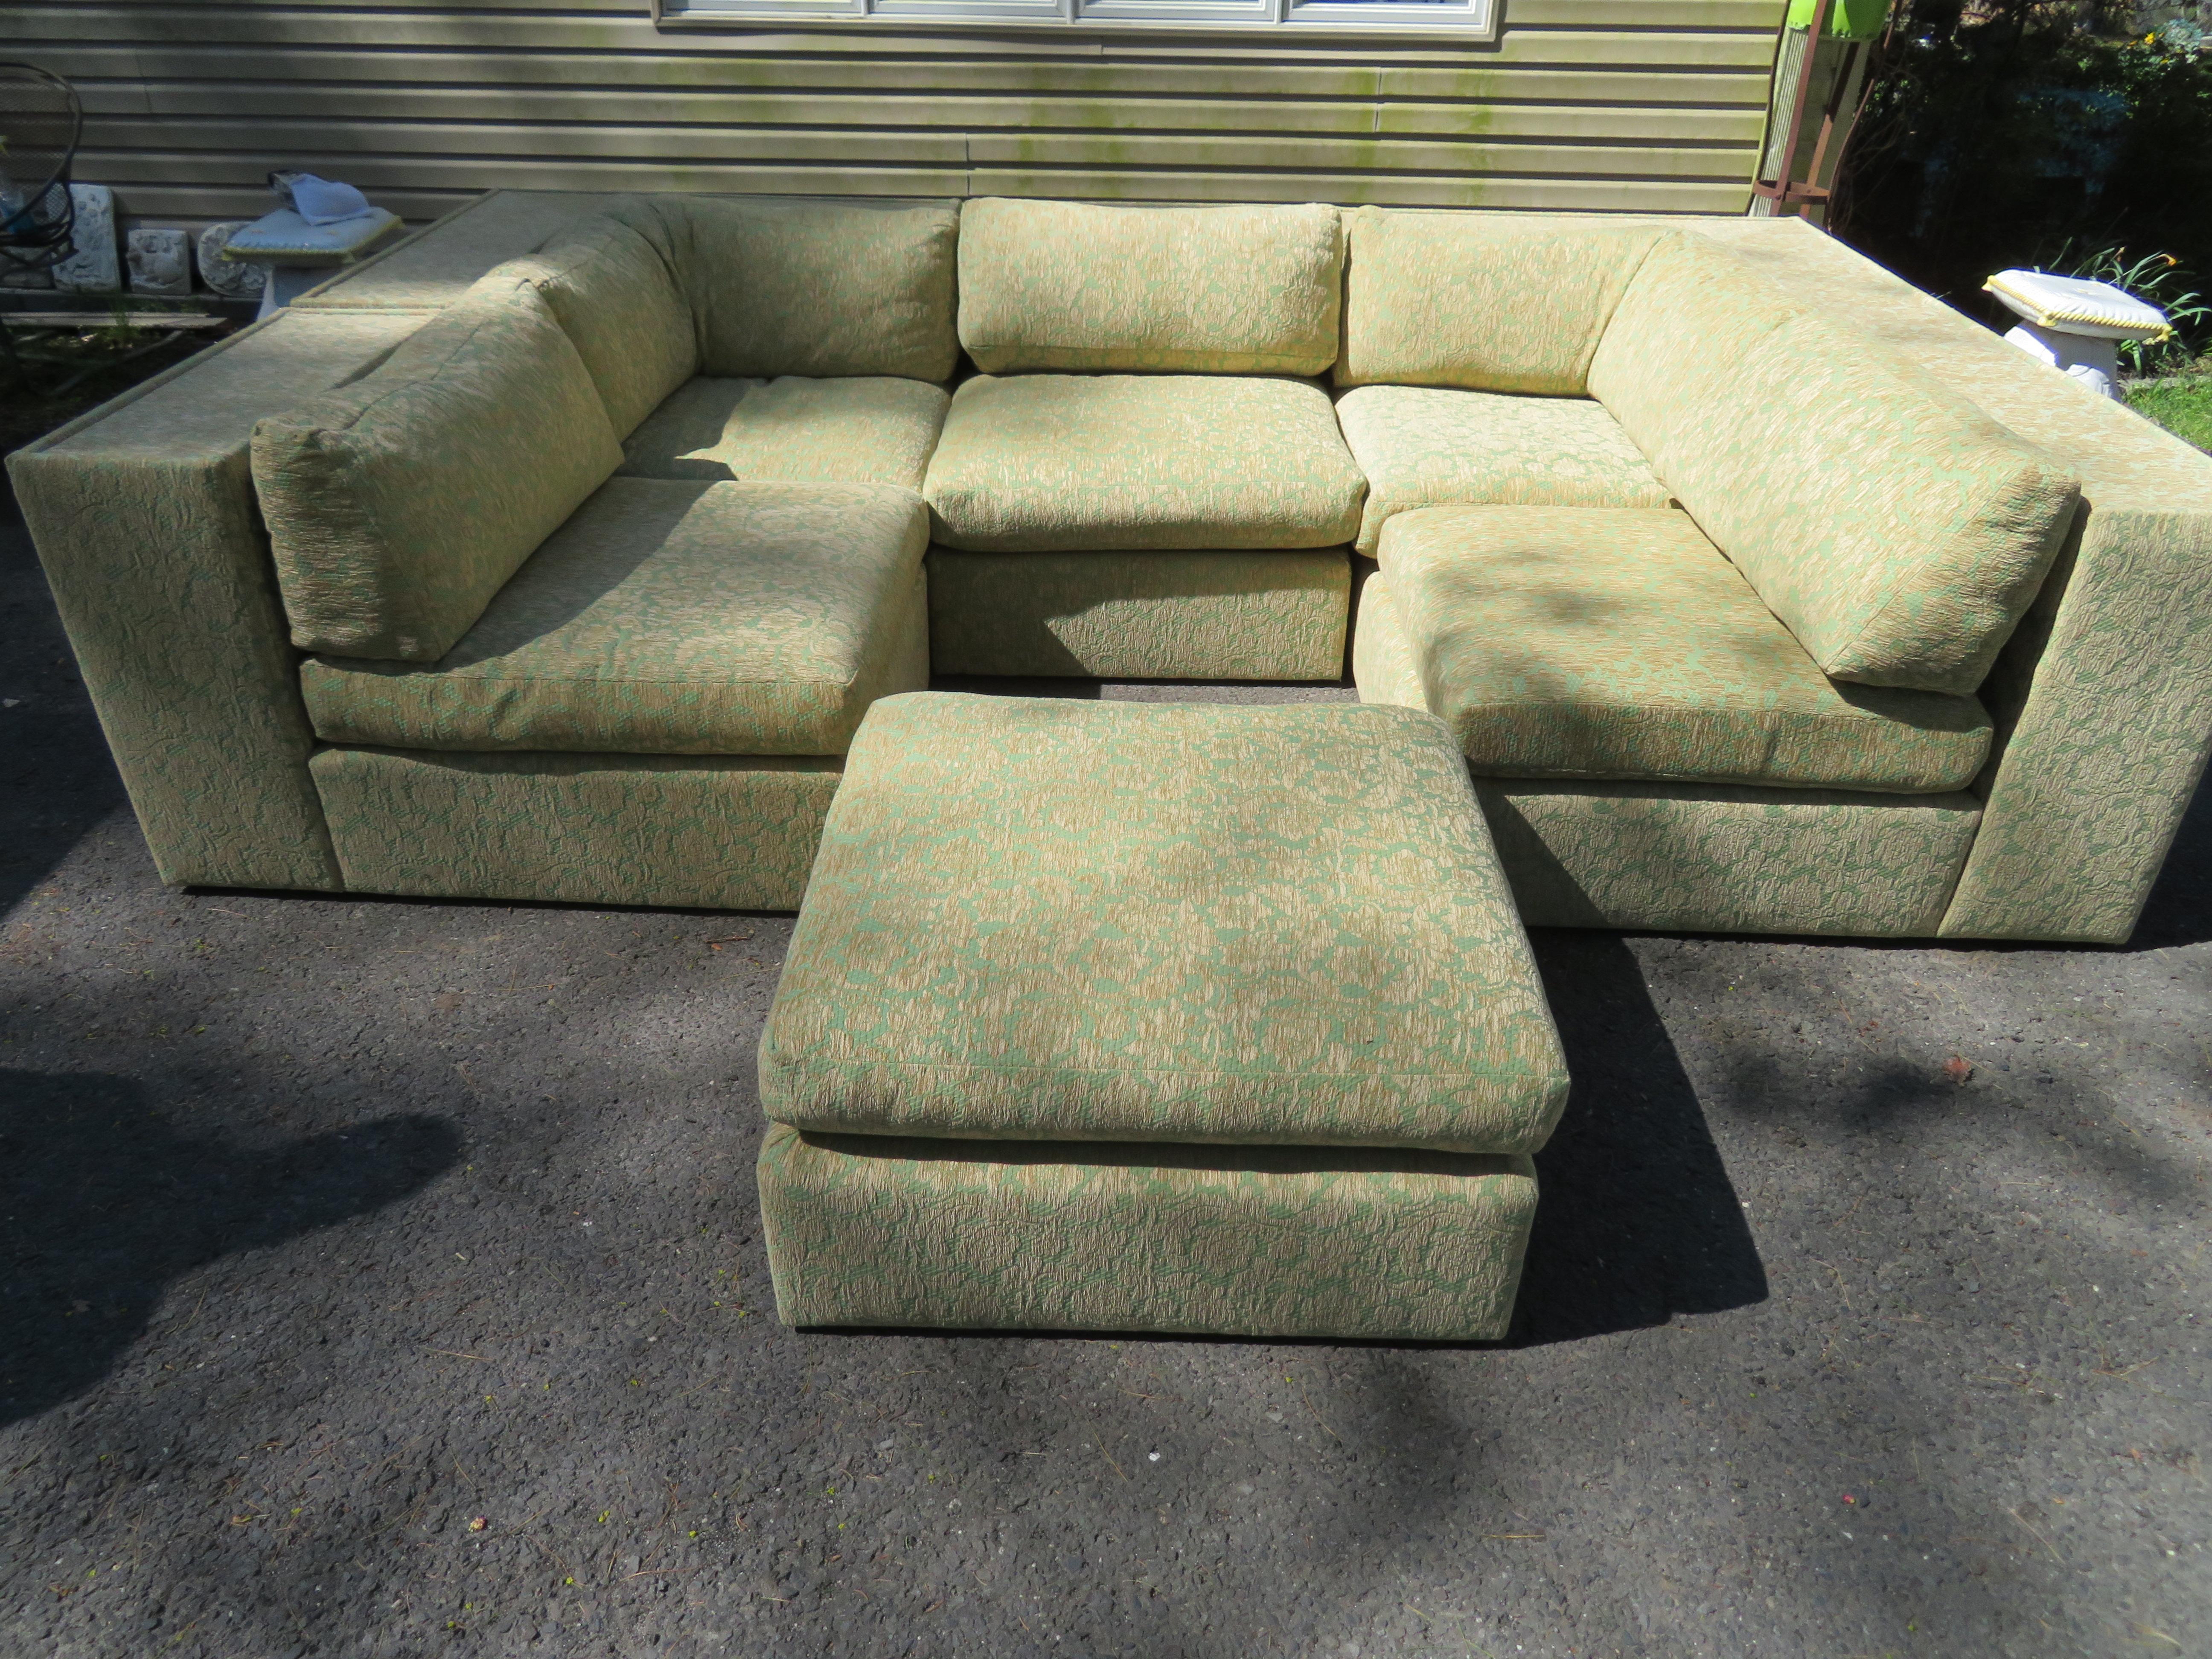 Upholstery Fantastic 5 Piece Milo Baughman Sectional Sofa for Thayer Coggin